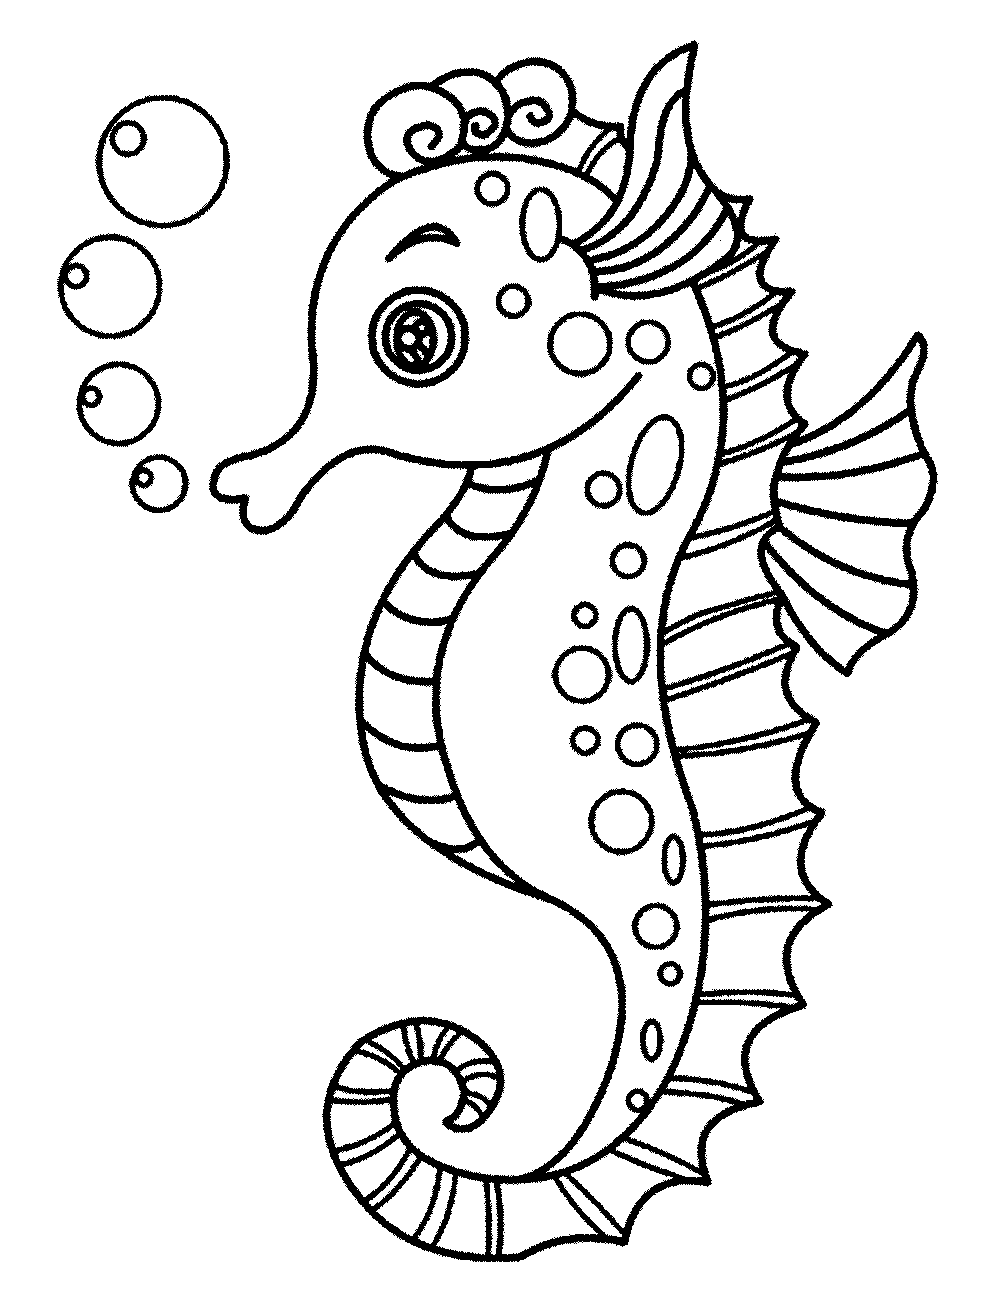 Gambar Ikan Kartun Di Laut - Radea